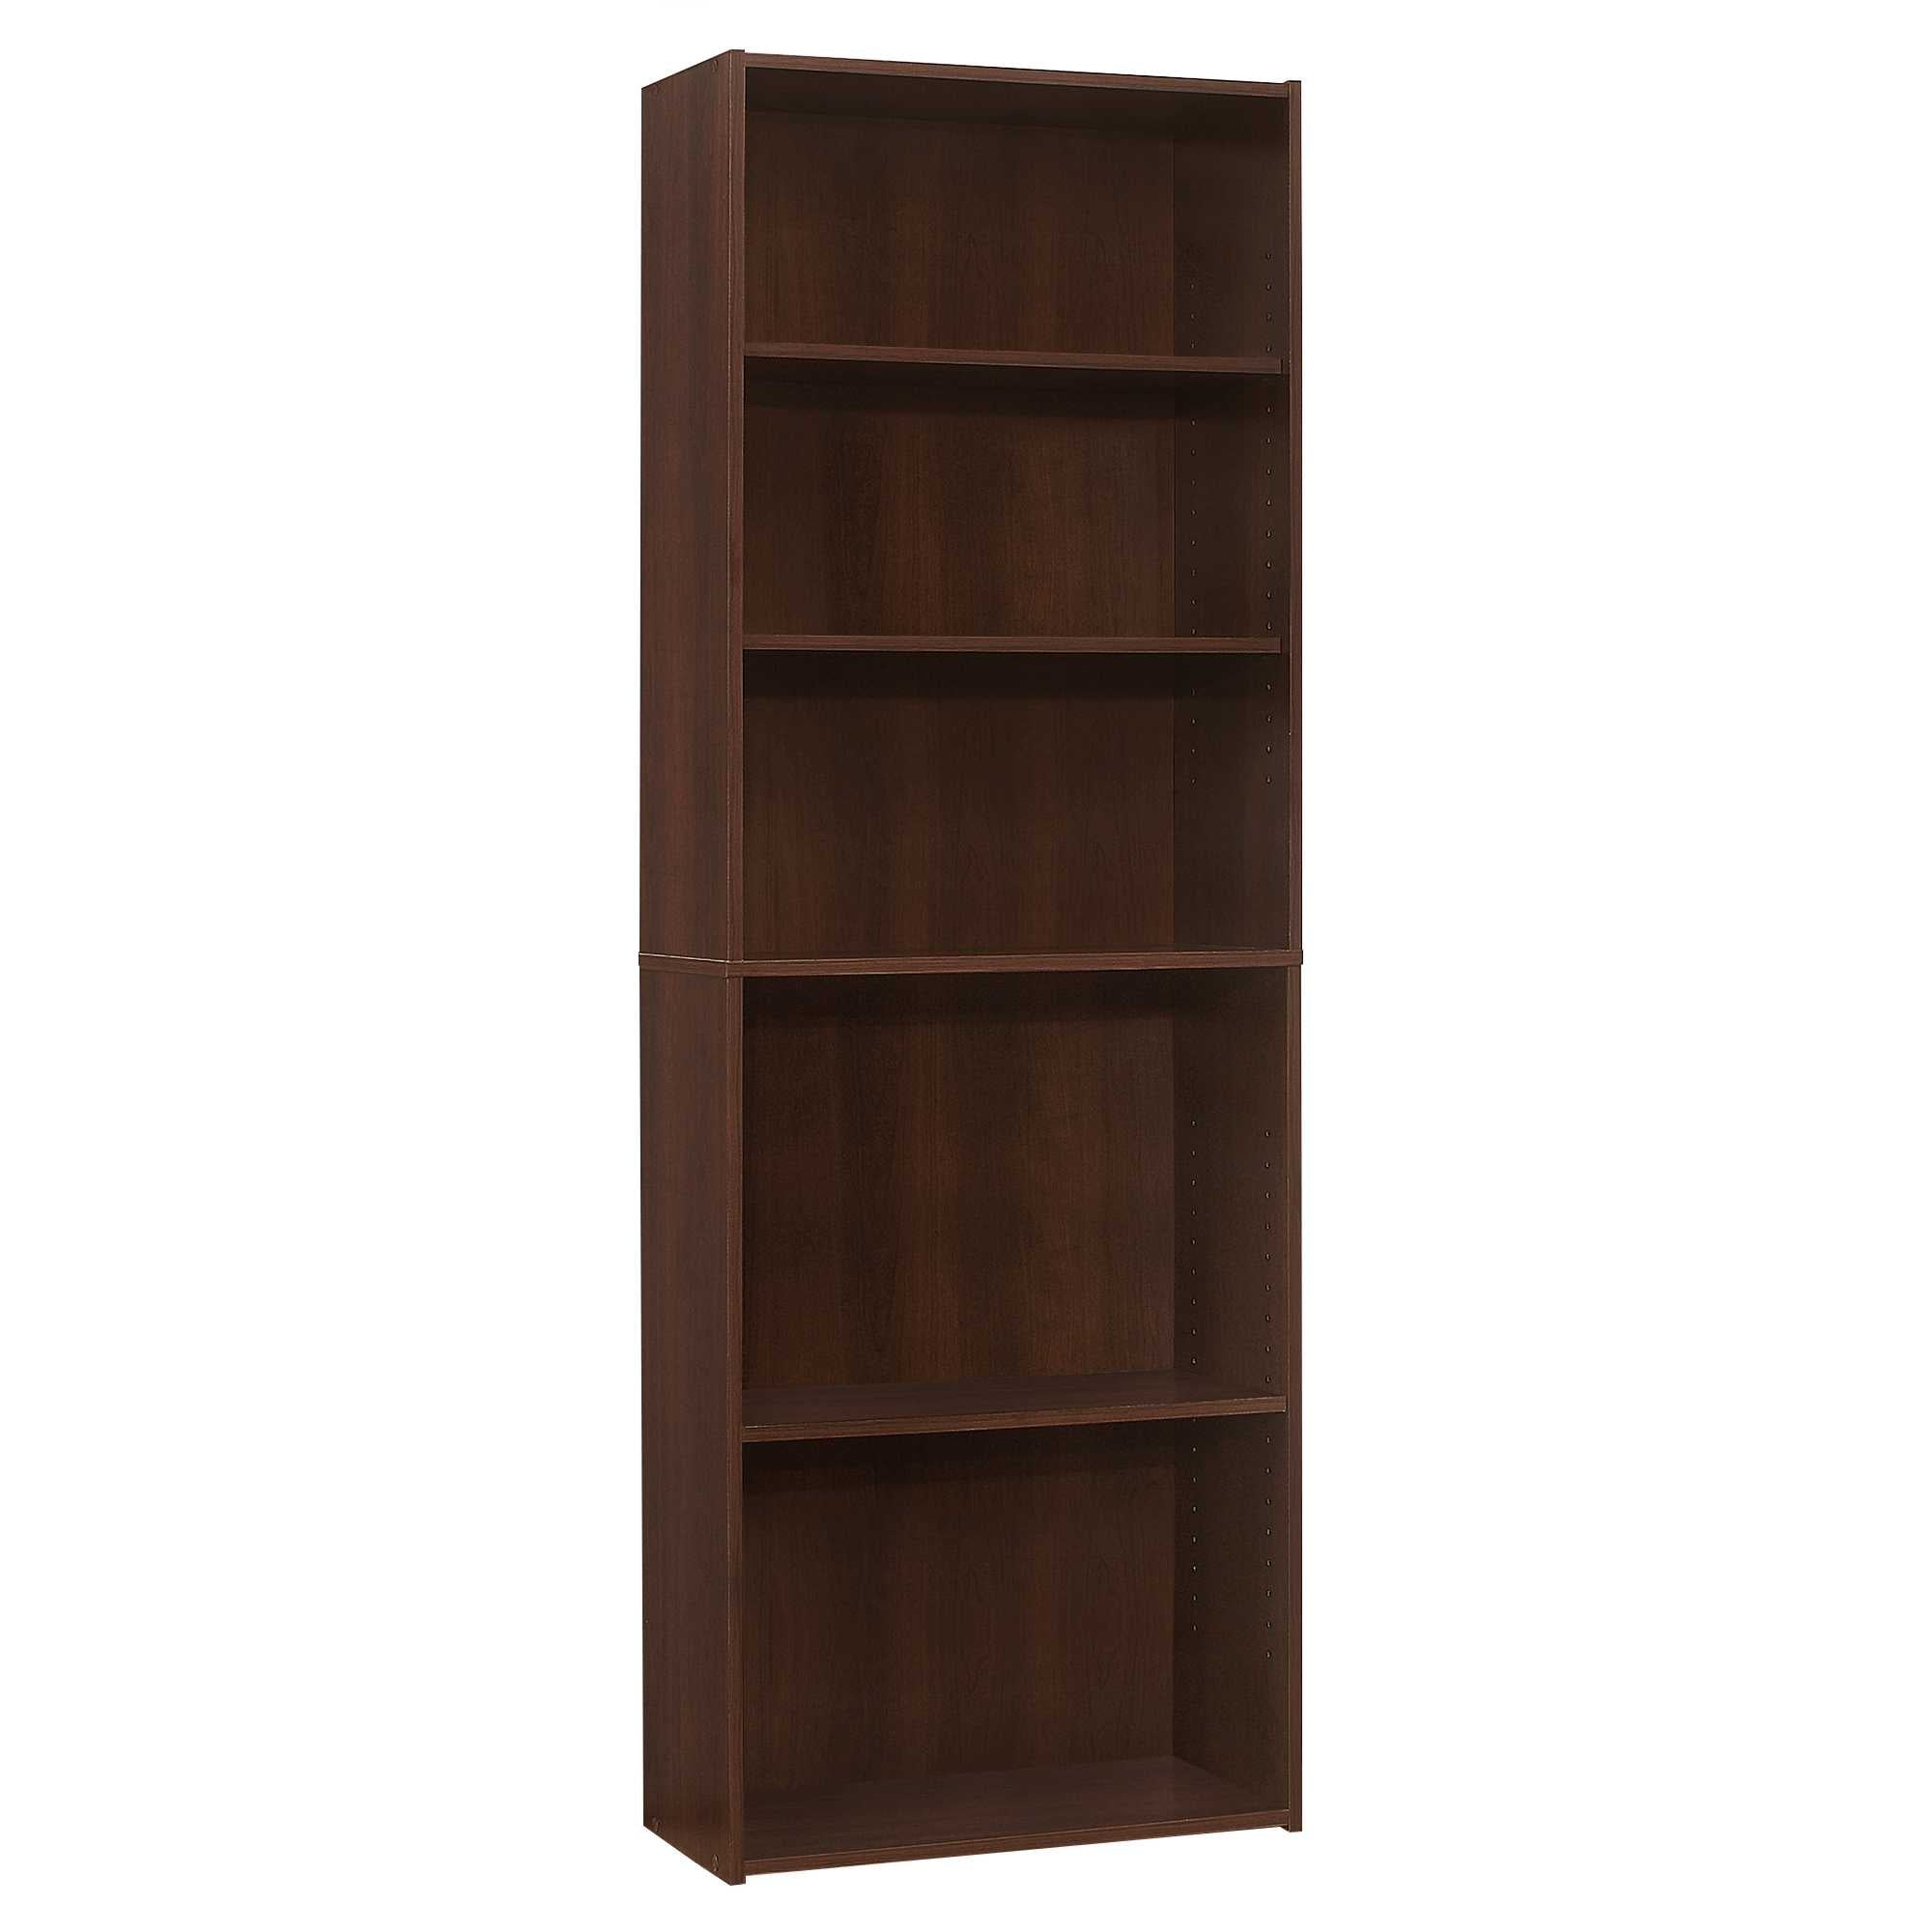 11.75" x 24.75" x 71.25" Cherry, 5 Shelves - Bookcase